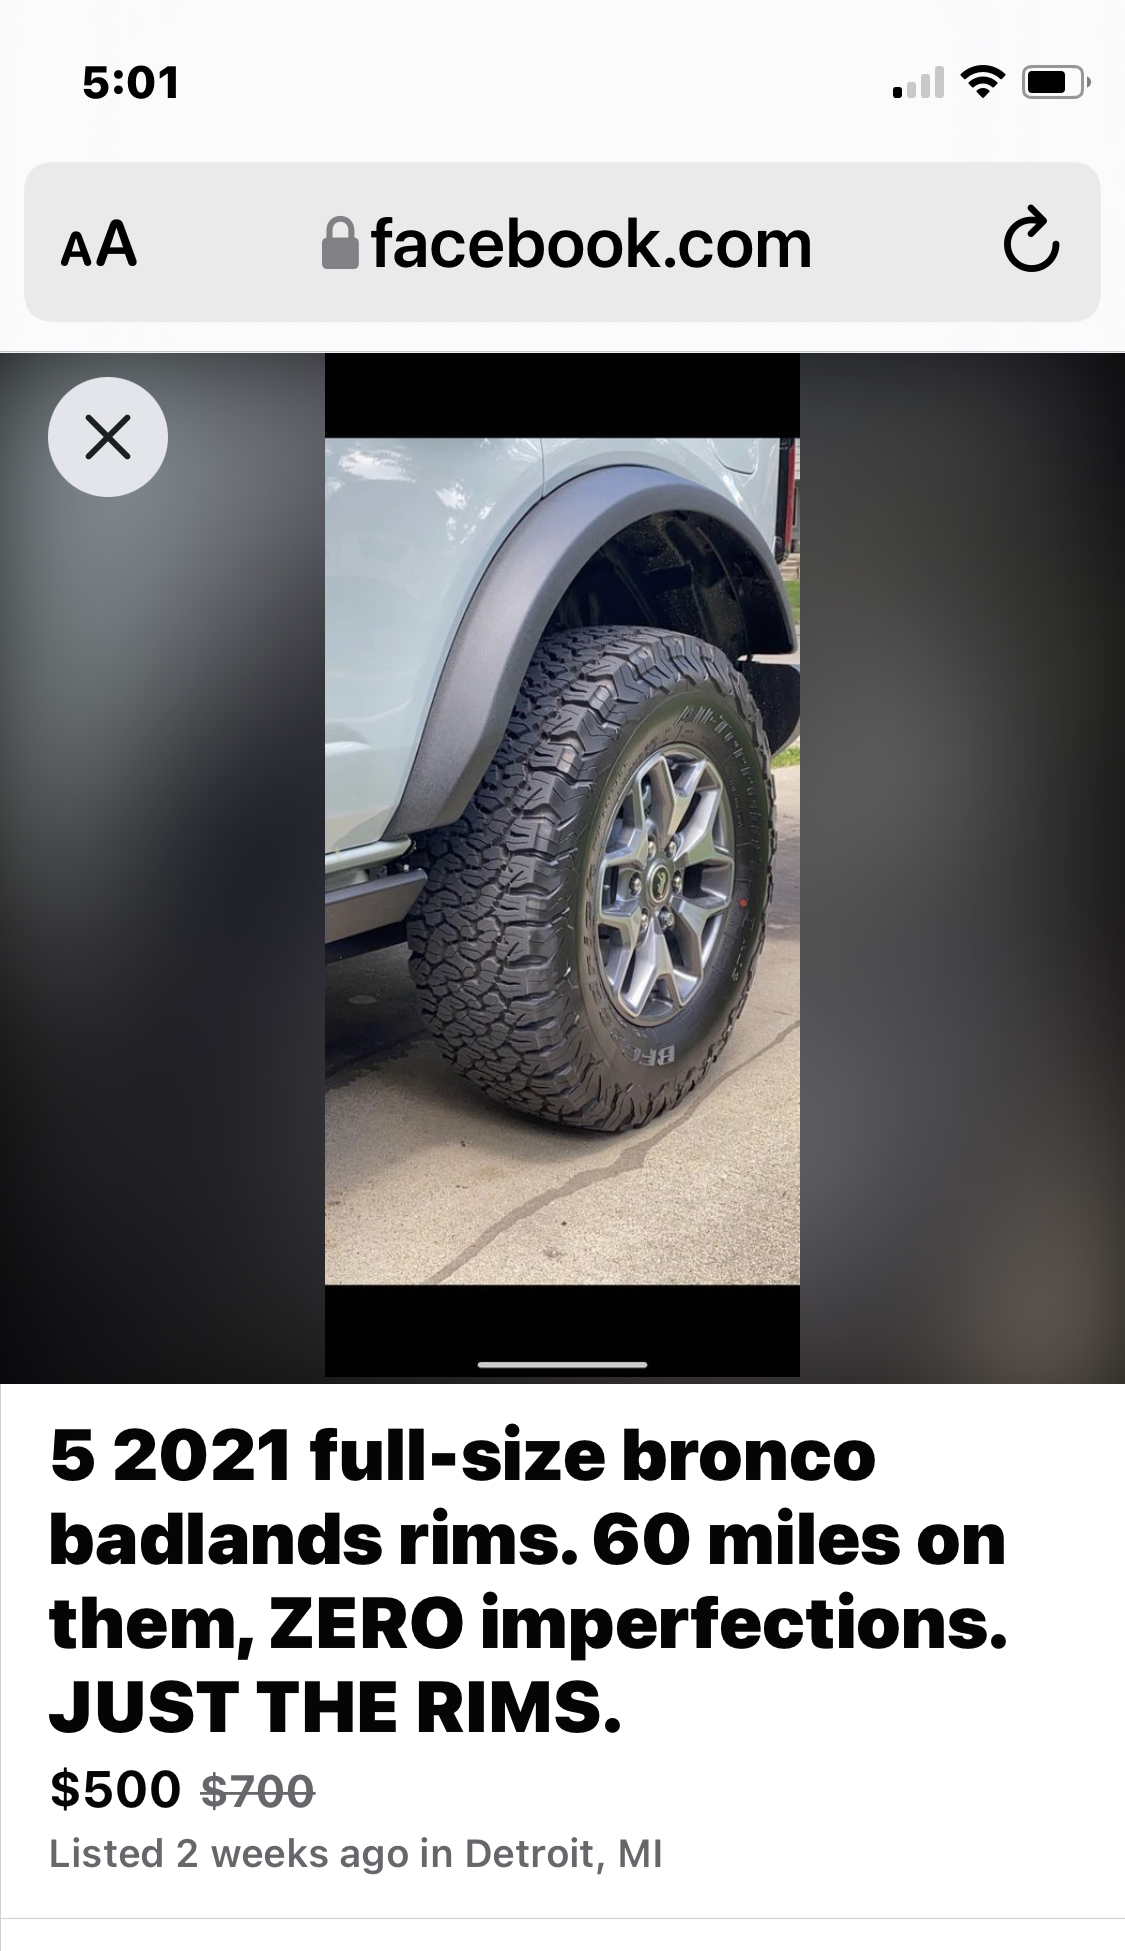 Ford Bronco WTS Badlands Rims $500 1496BA0B-A659-47C8-B0AB-EA3B0B88732E